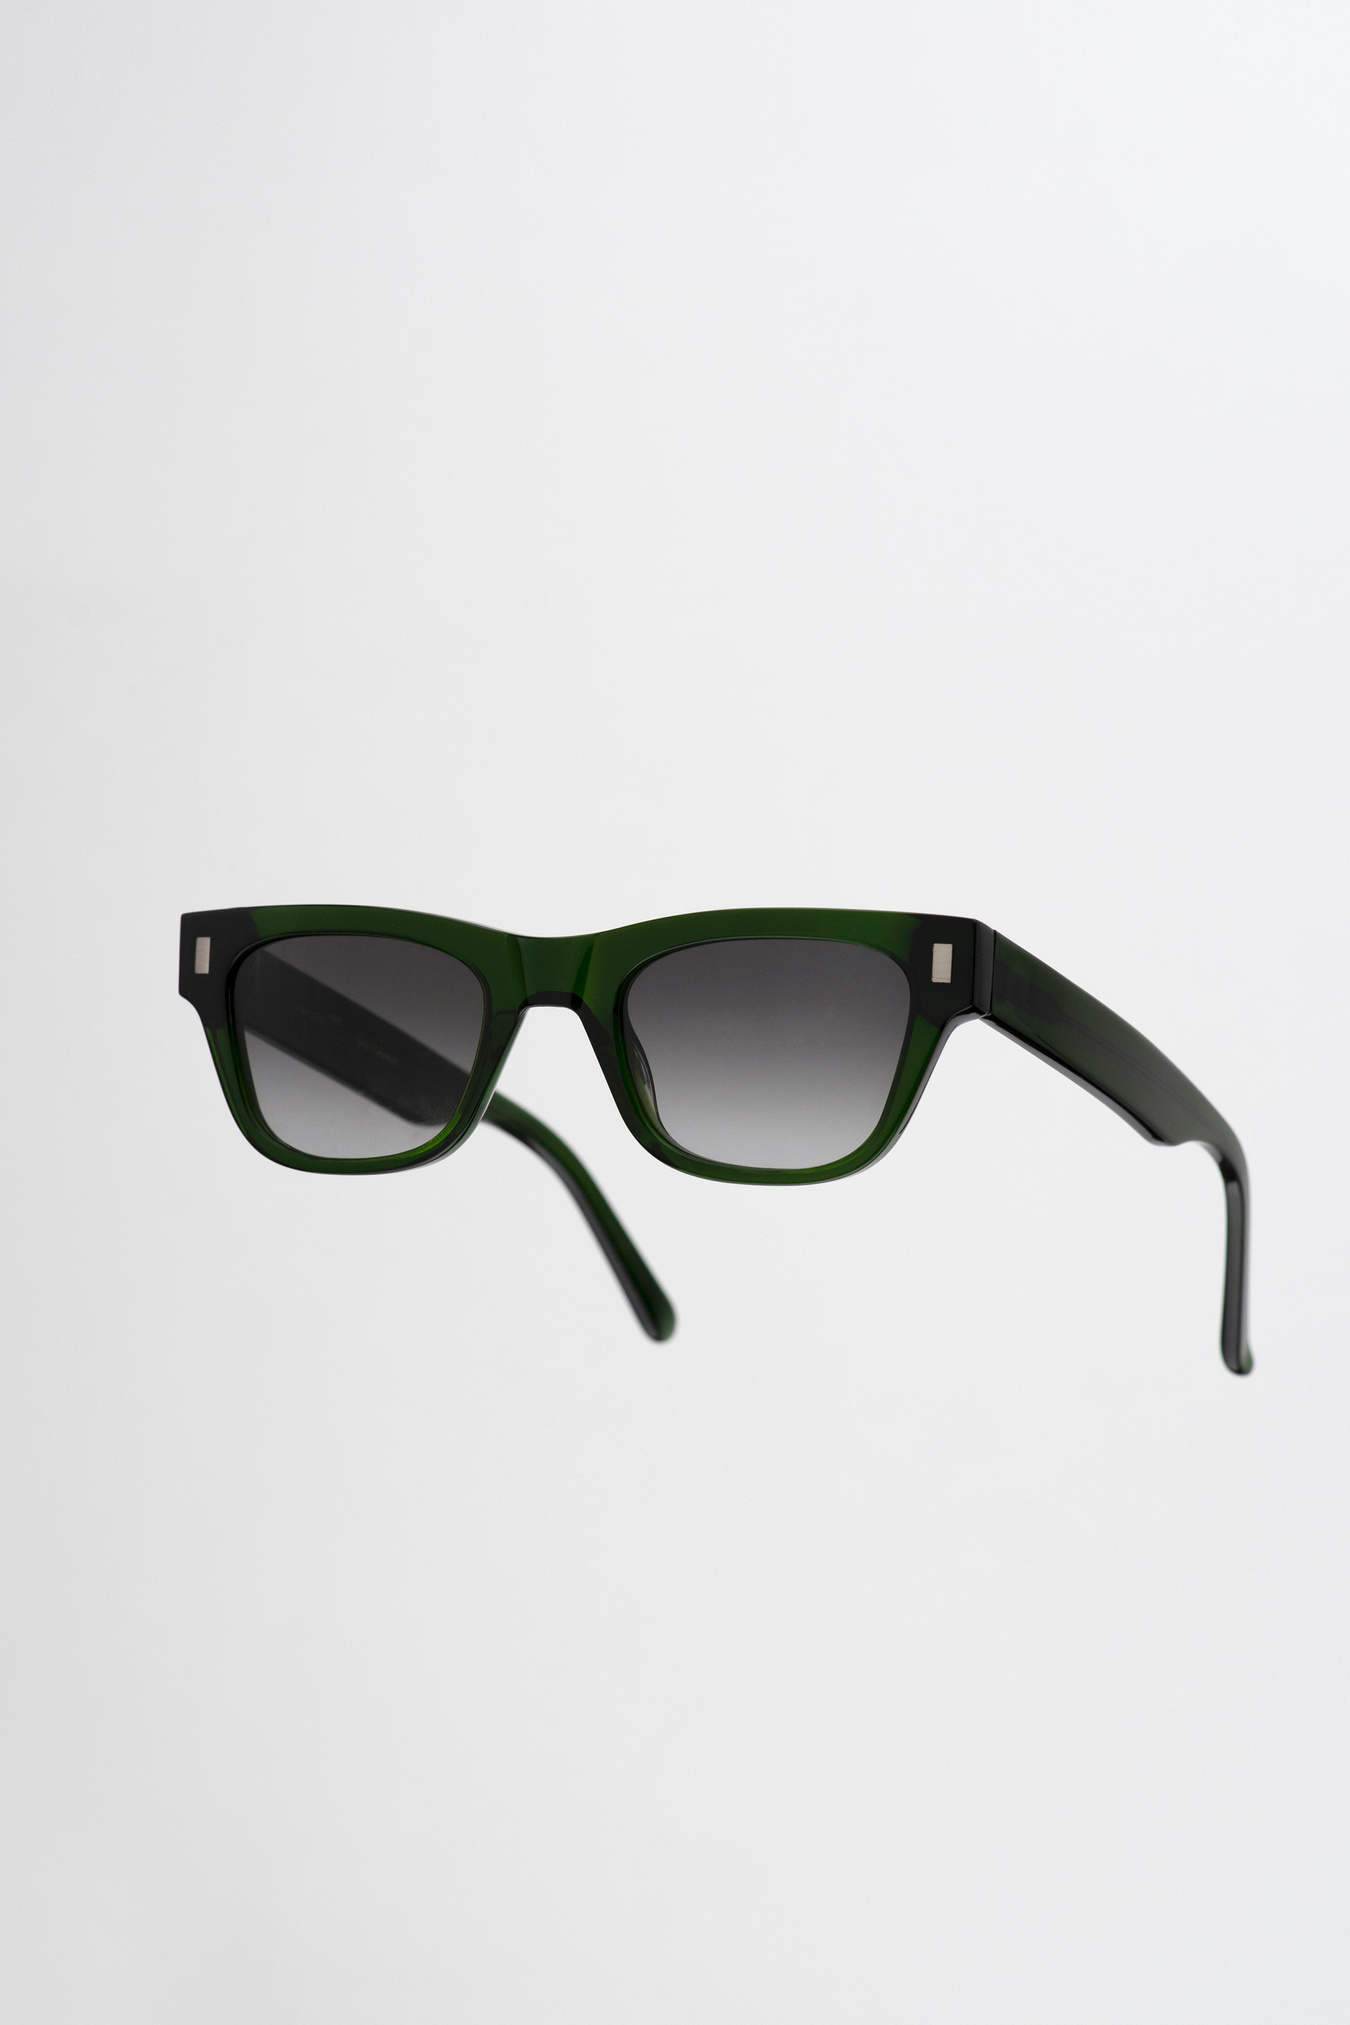 Monokel Eyewear Aki Bottle Green Sunglasses 